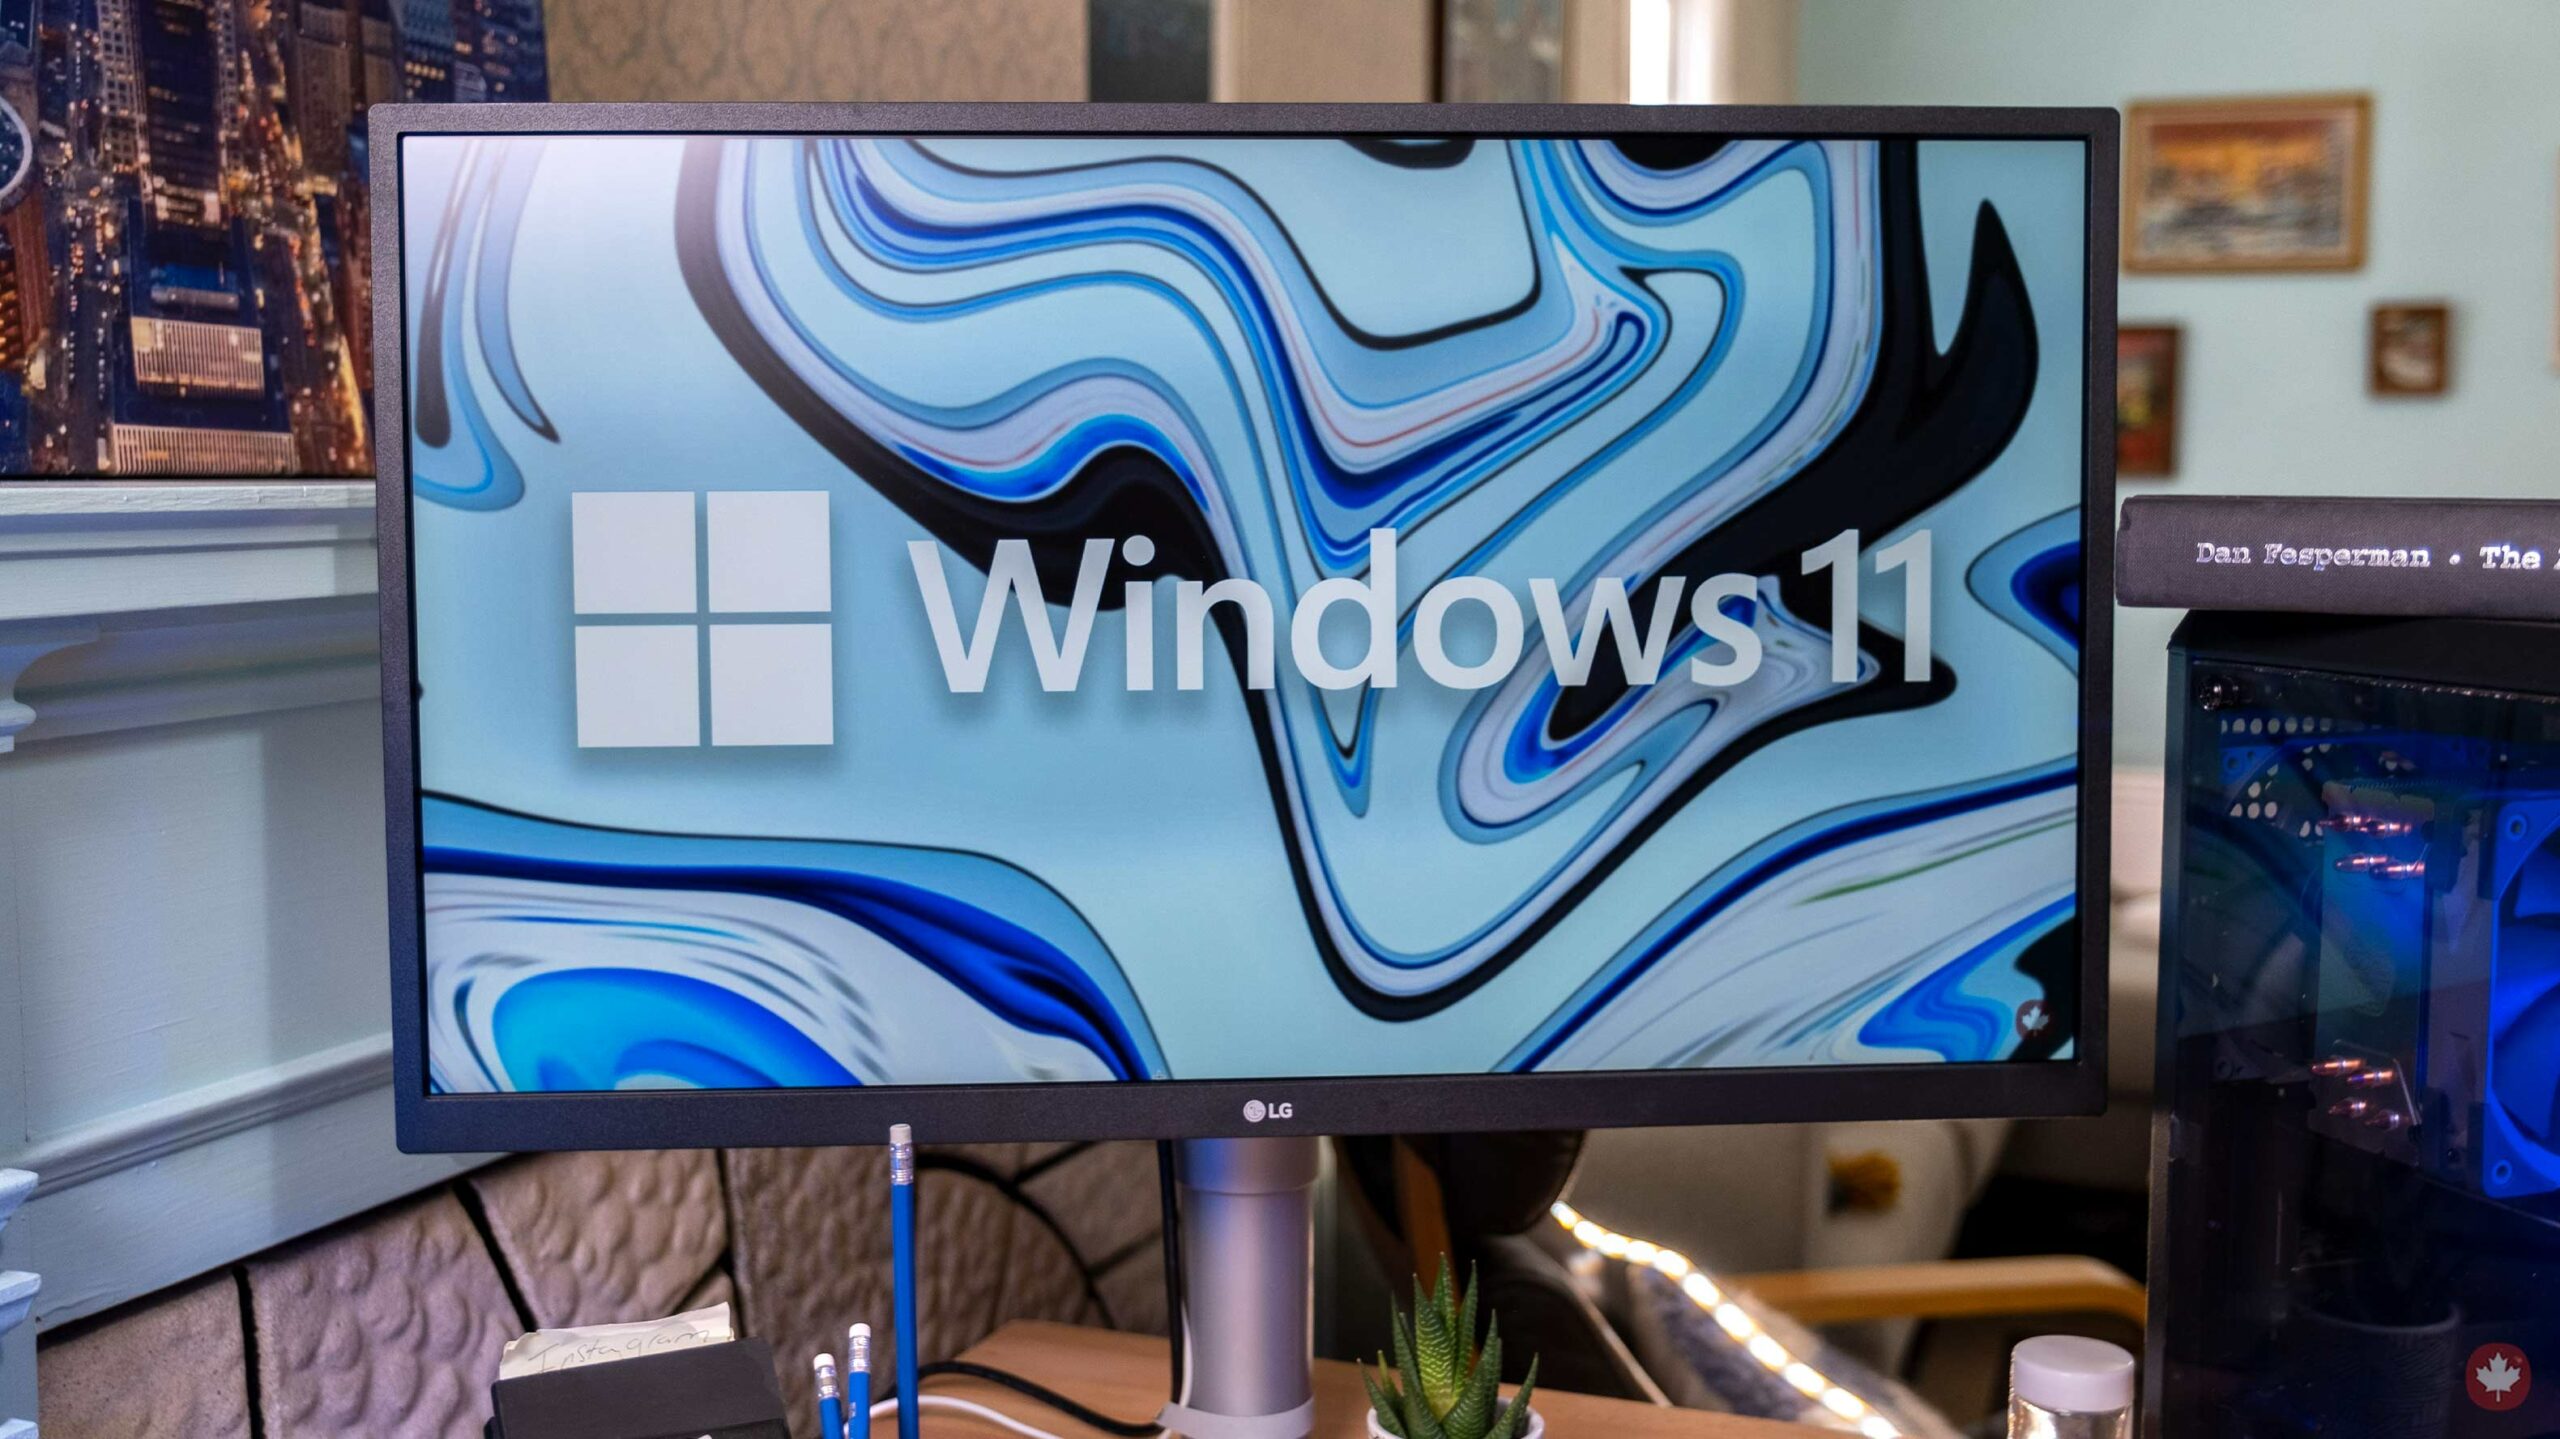 Windows 10 Header 1 Scaled